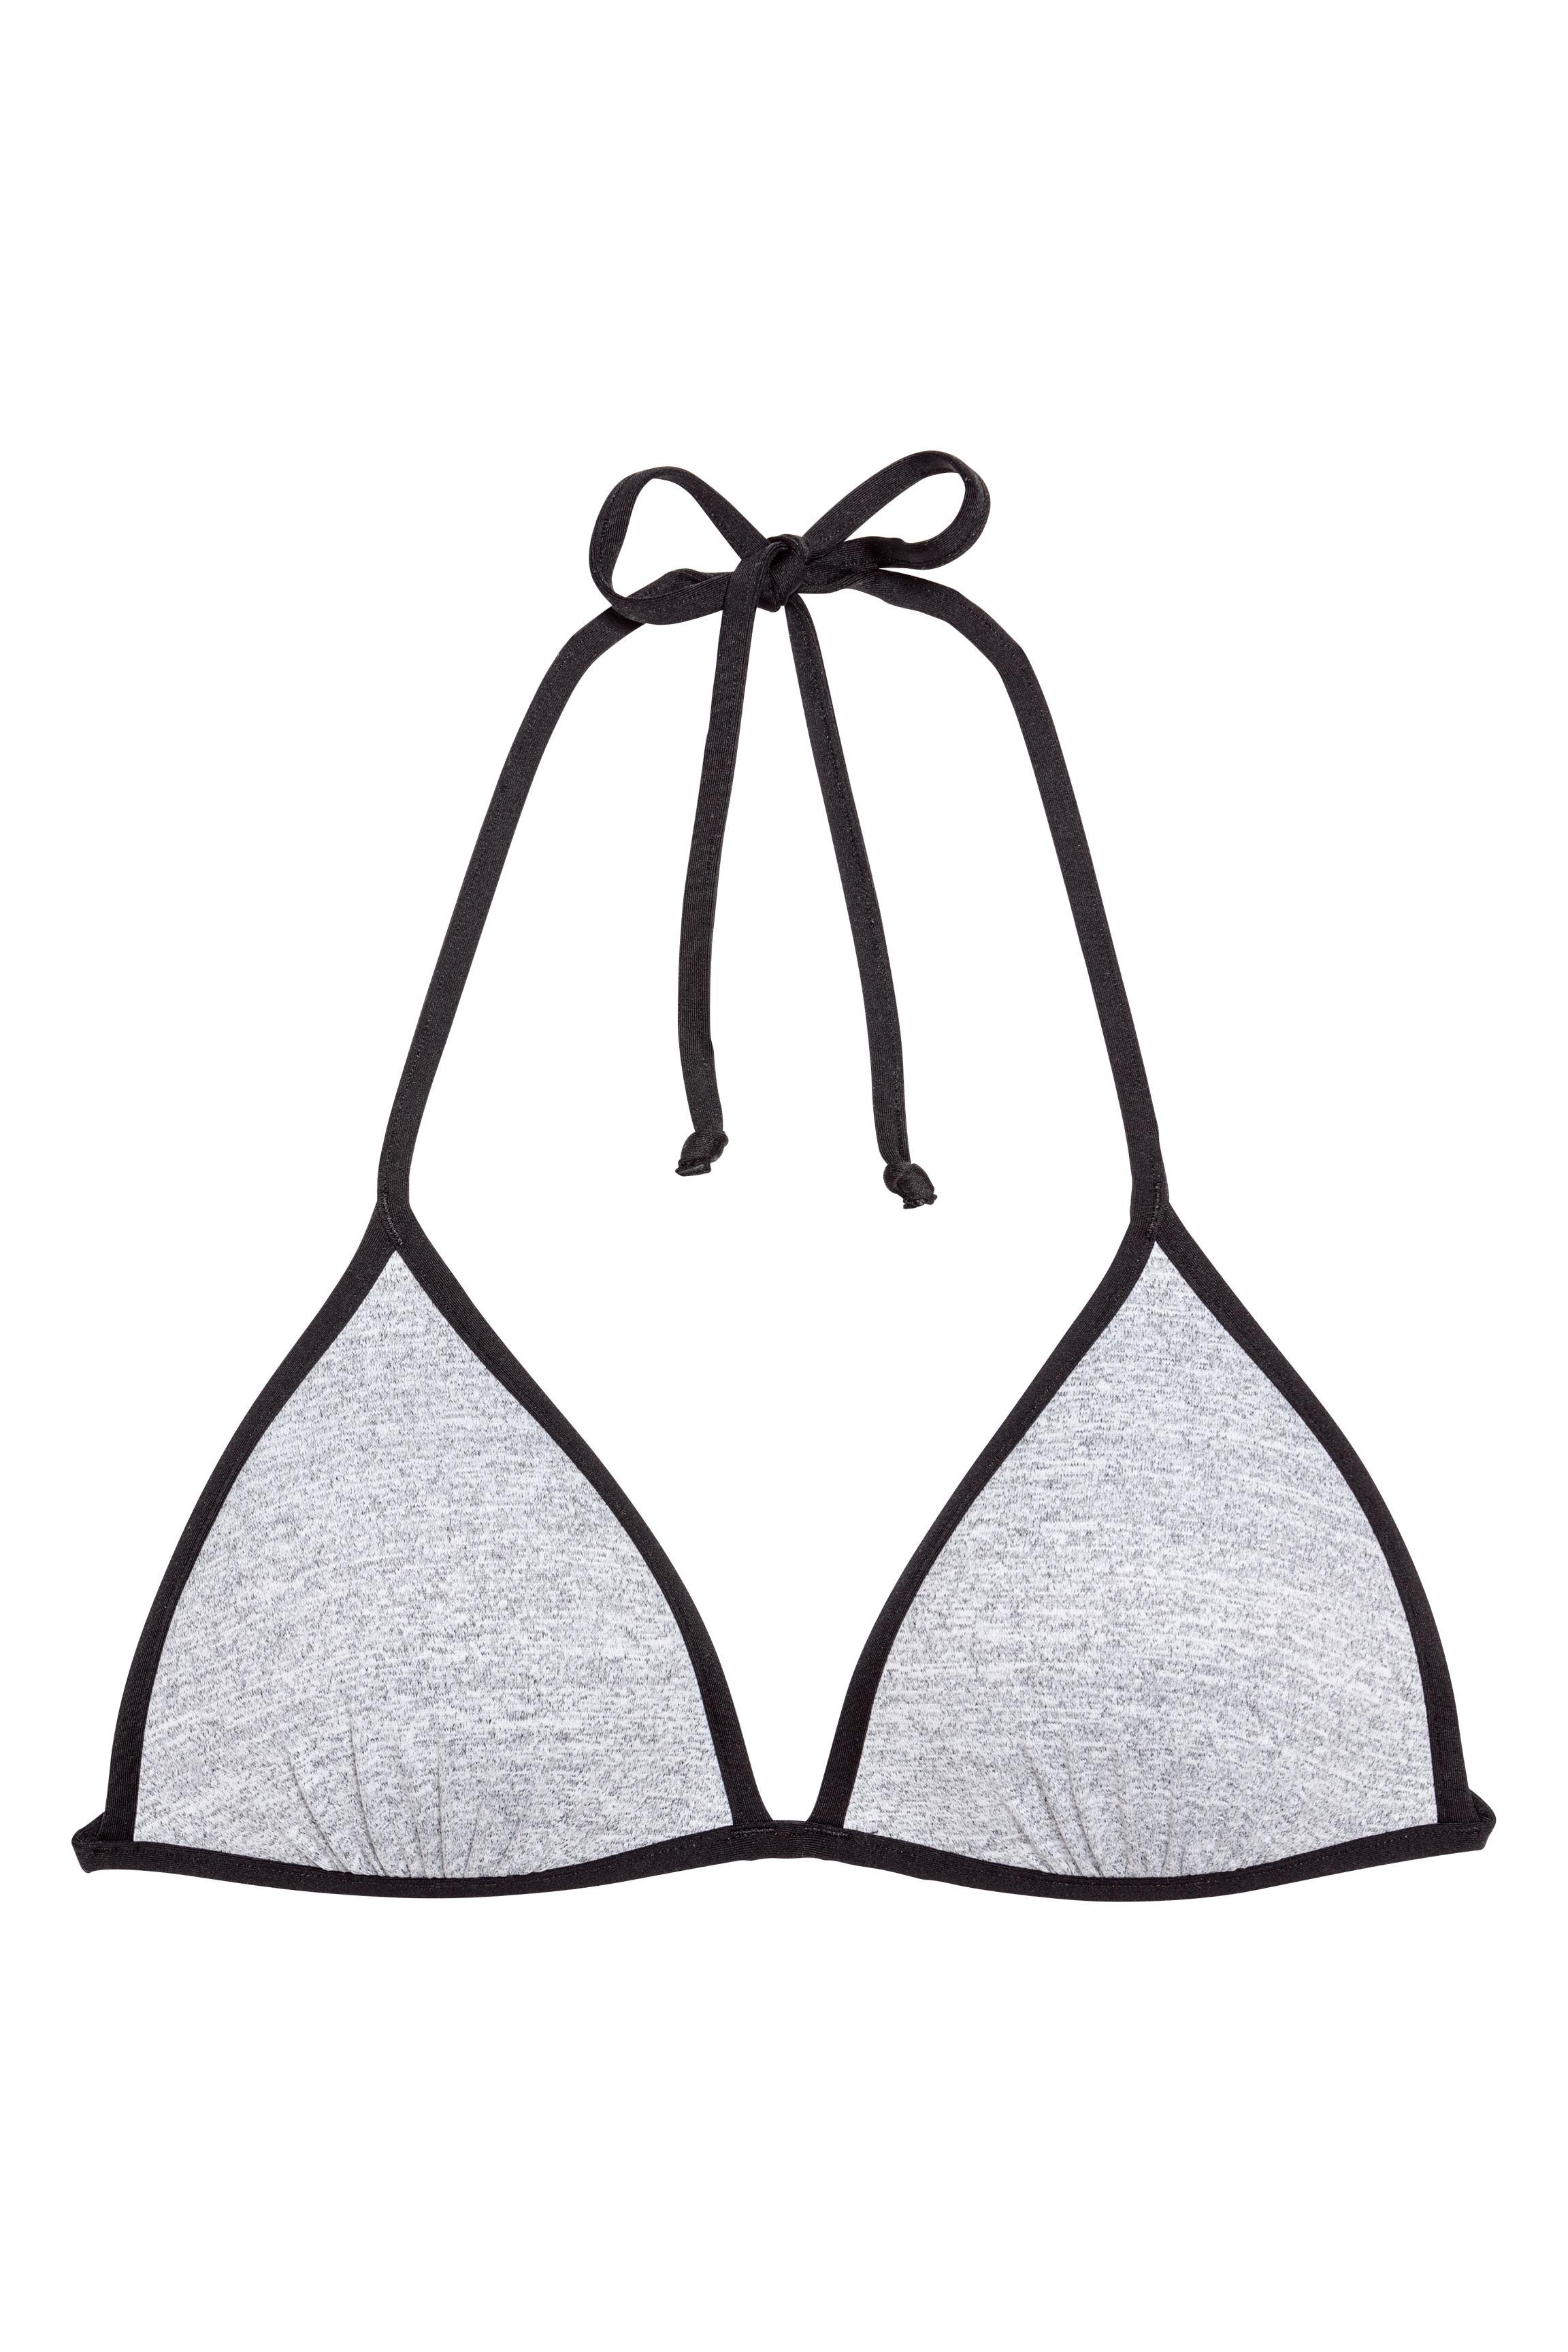 H&M Synthetic Push-up Triangle Bikini Top in Light Grey Marl (Gray) | Lyst